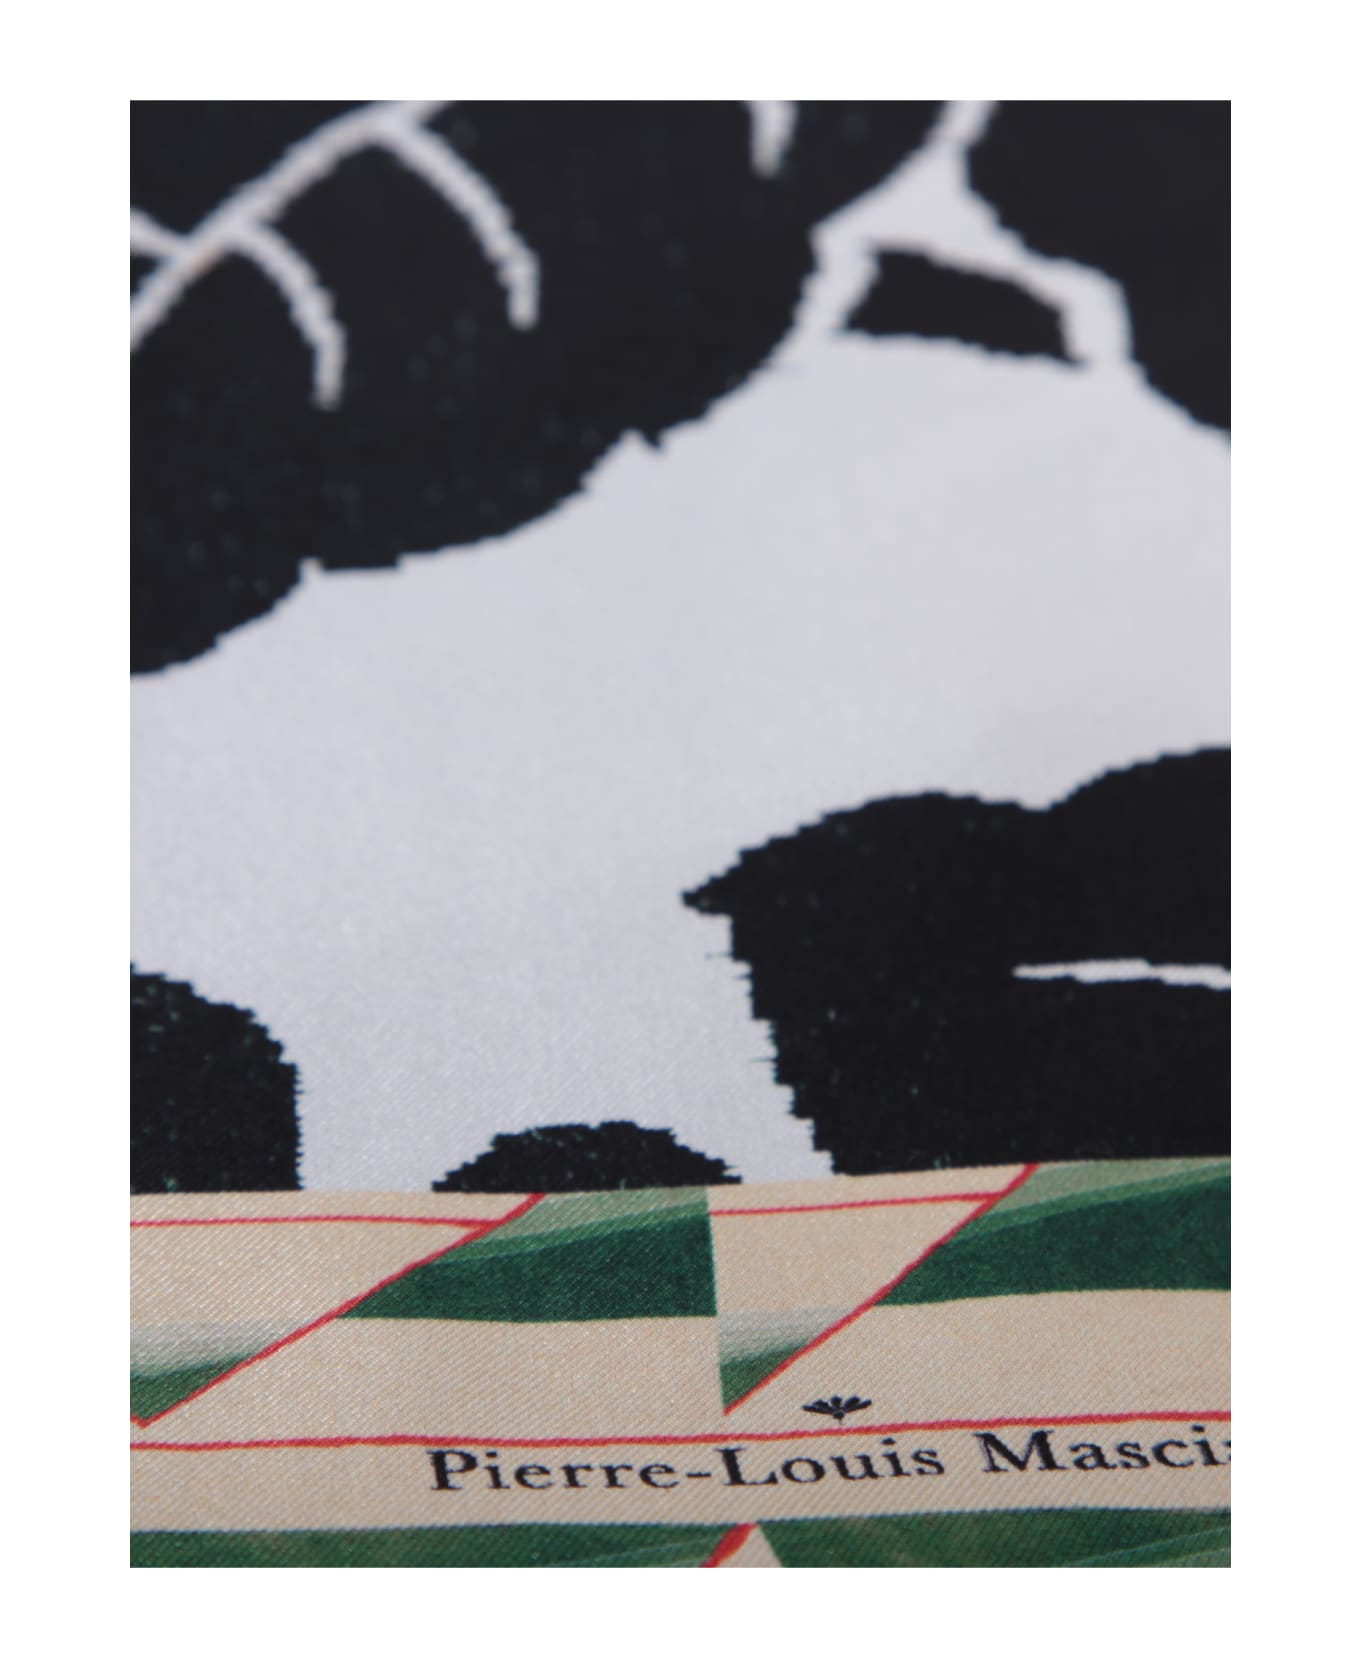 Pierre-Louis Mascia Aloe Teal/black Scarf - Green